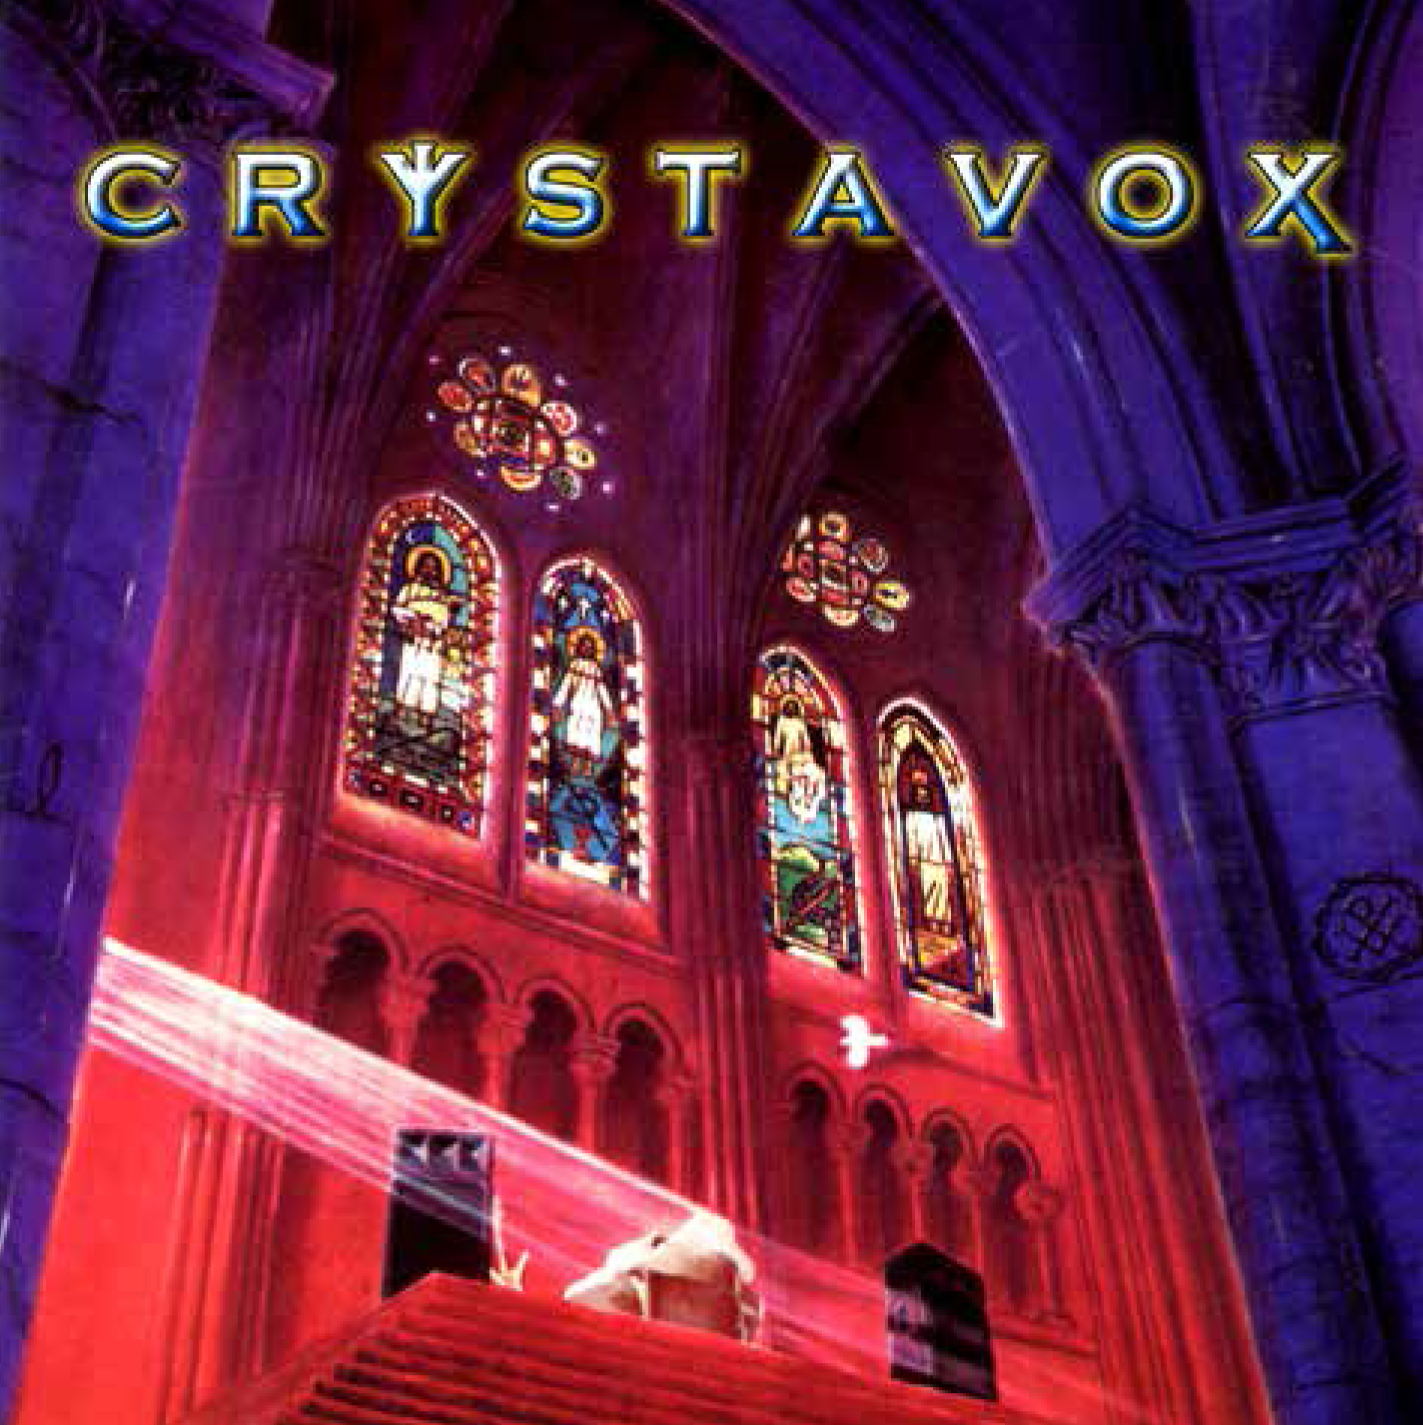 Crystavox great melodic 80s metal!